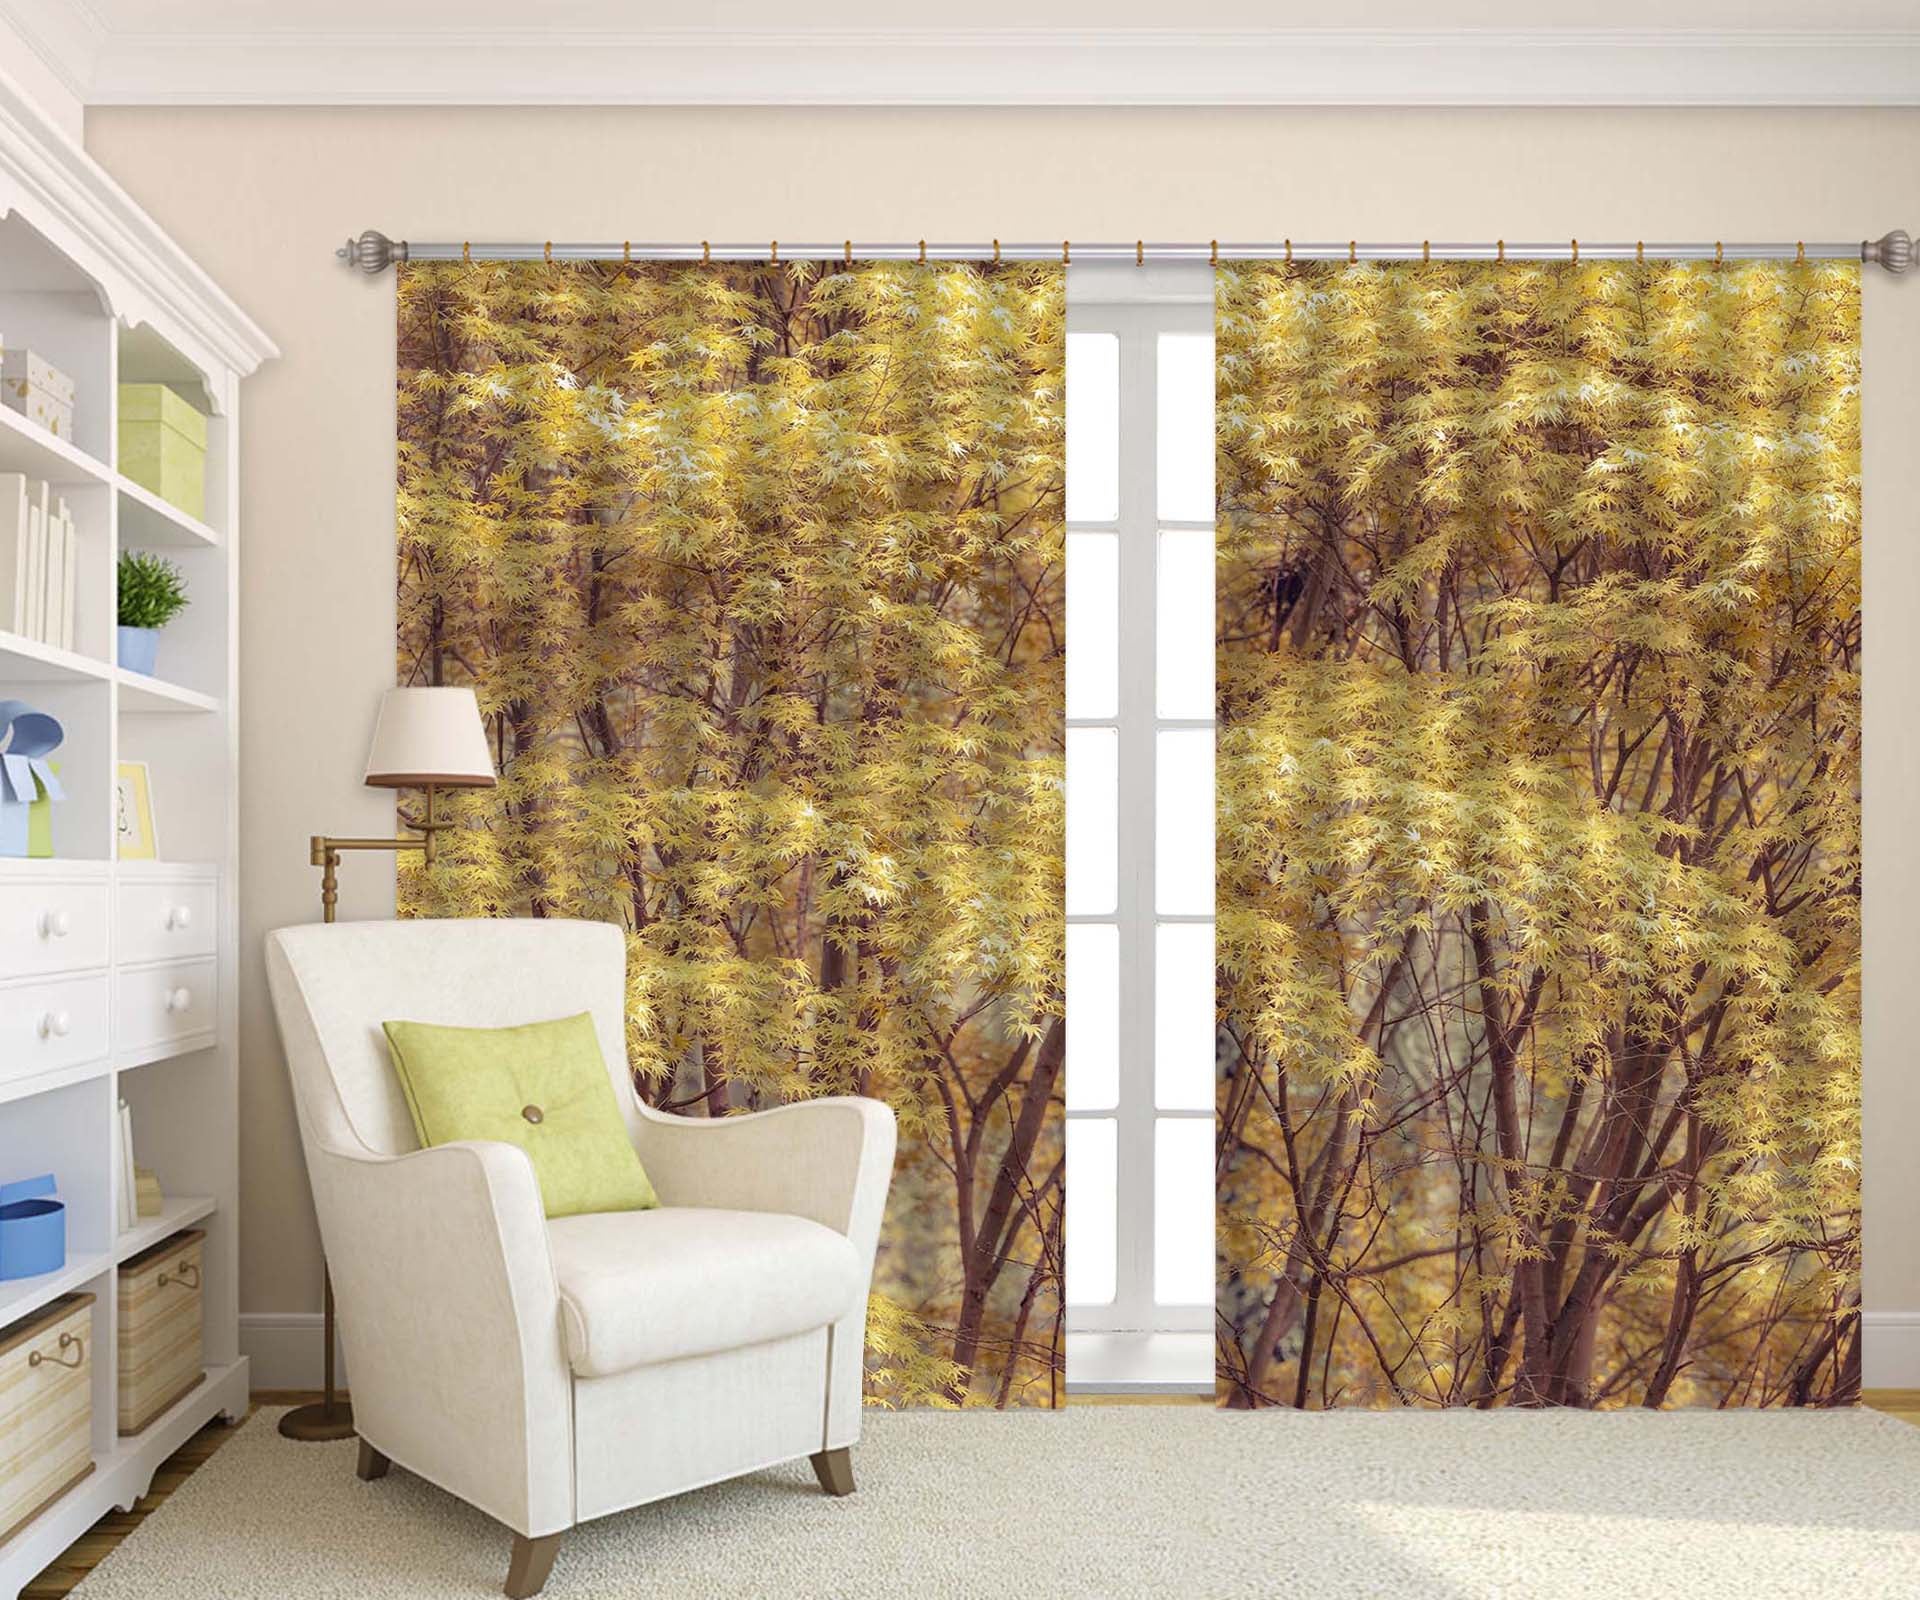 3D Yellow Wood 6389 Assaf Frank Curtain Curtains Drapes